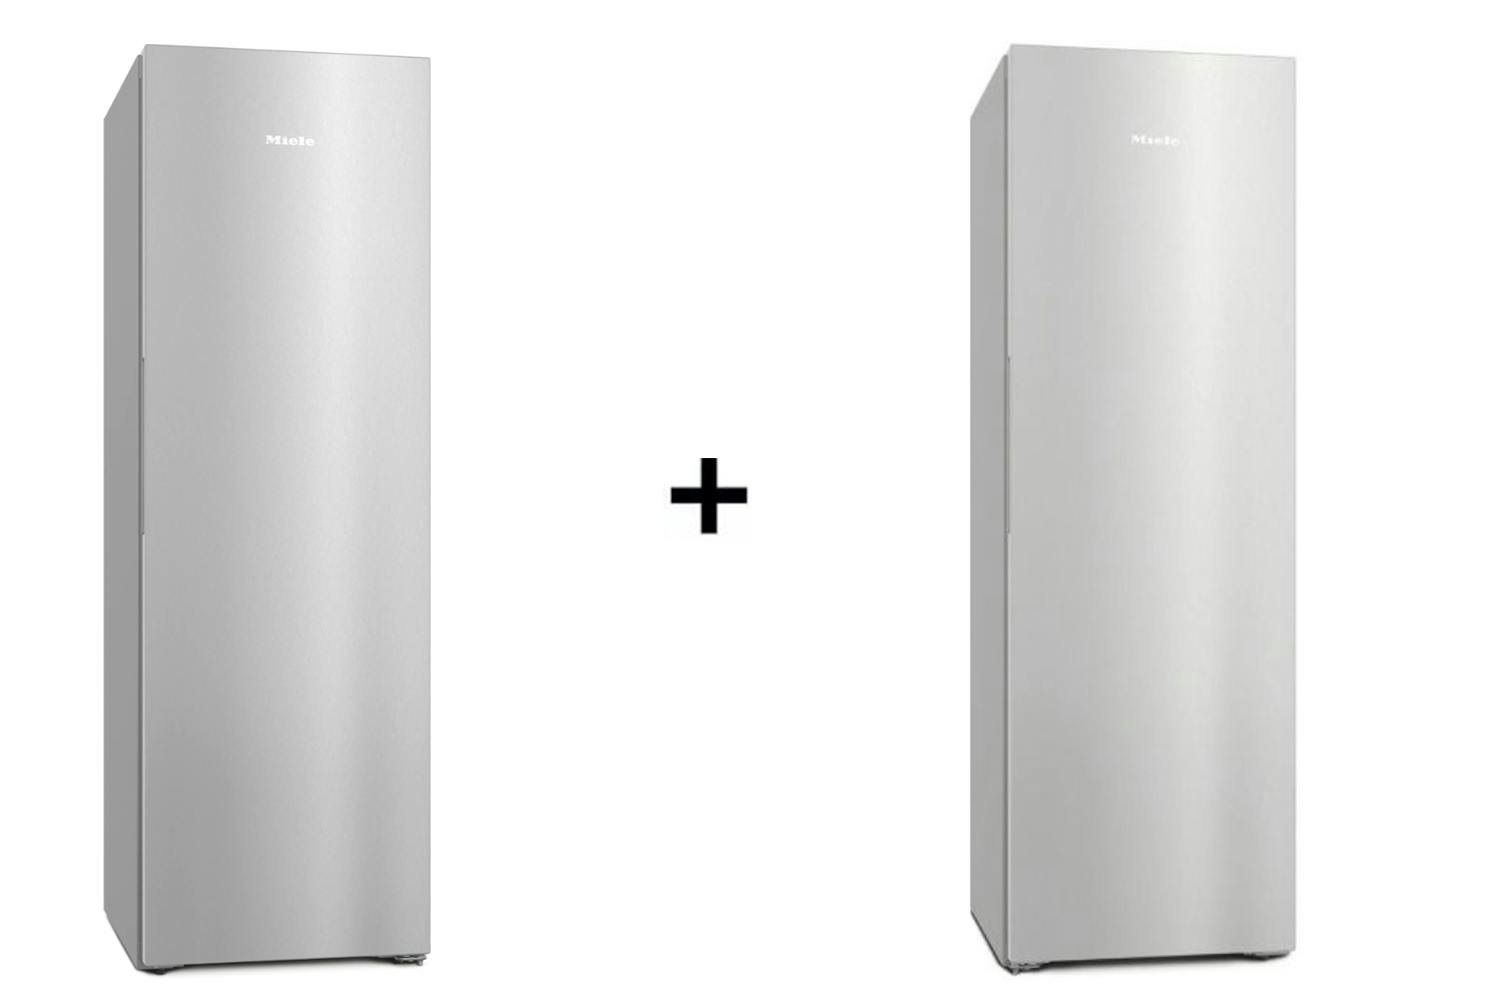 Miele Freestanding Refrigerator & Miele Freestanding Tall Freezer Bundle